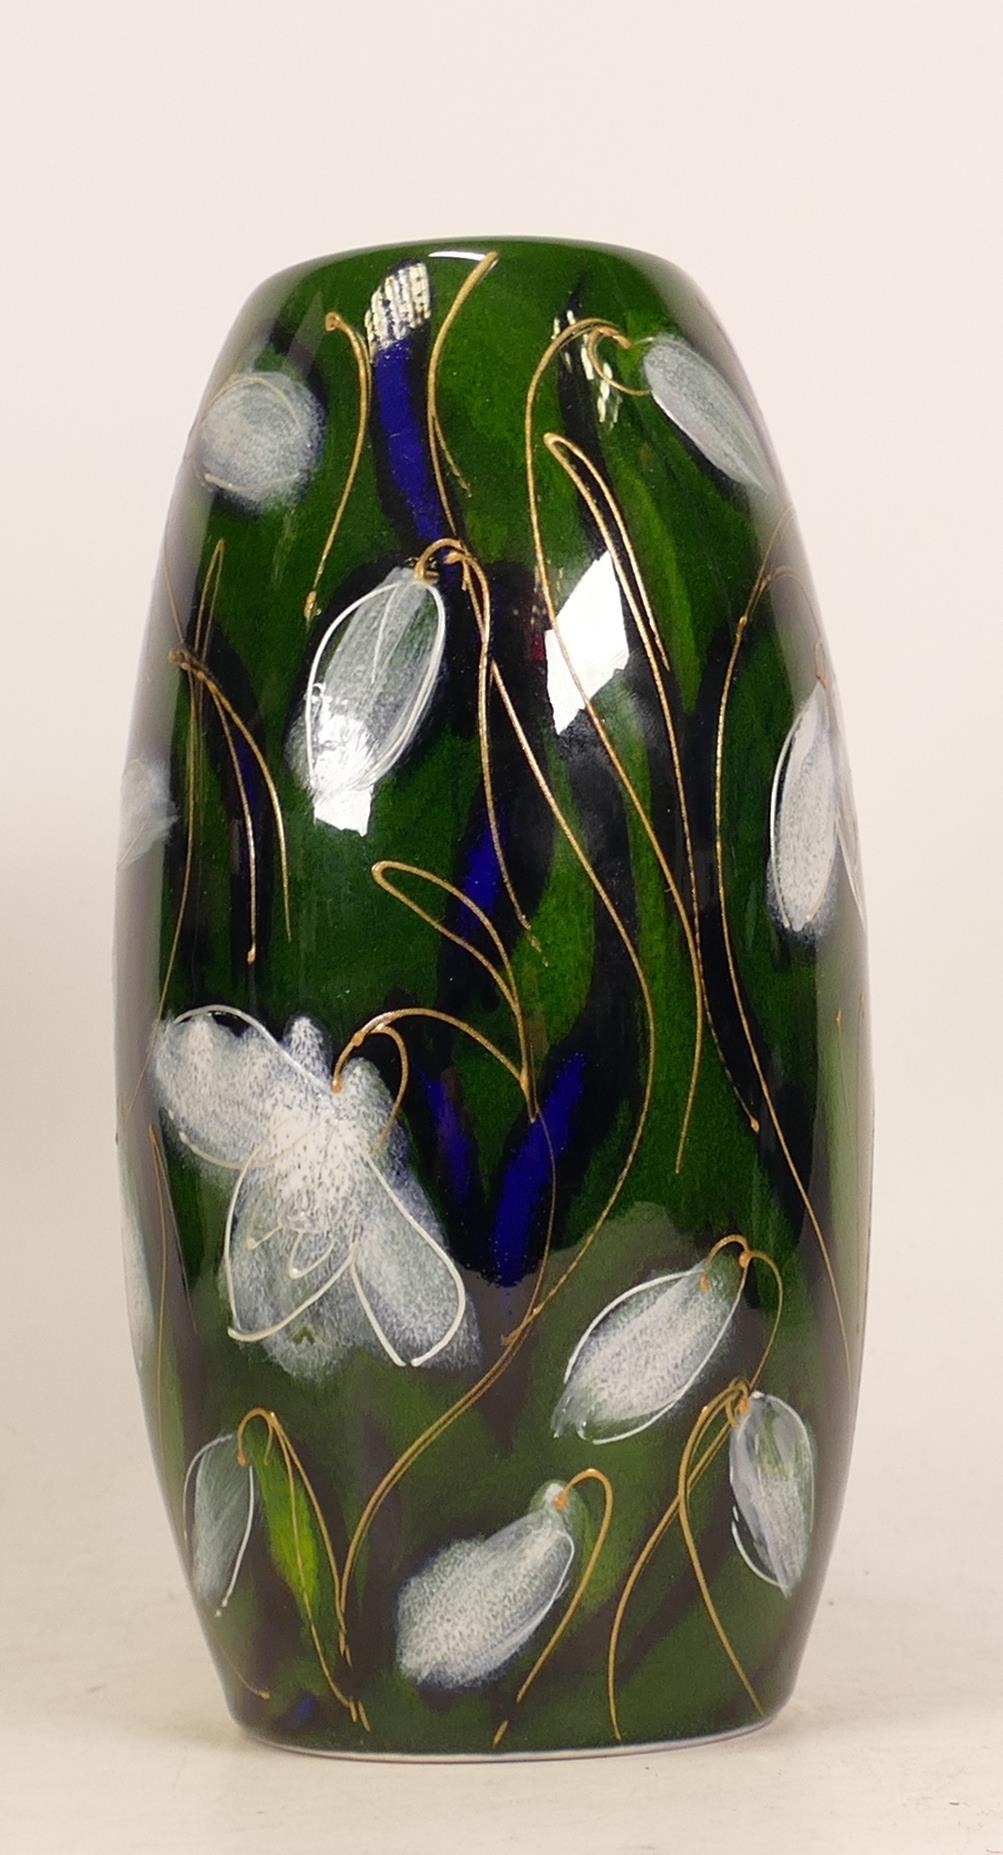 Anita Harris Snowdrop vase, gold signed to base, height 17.5cm